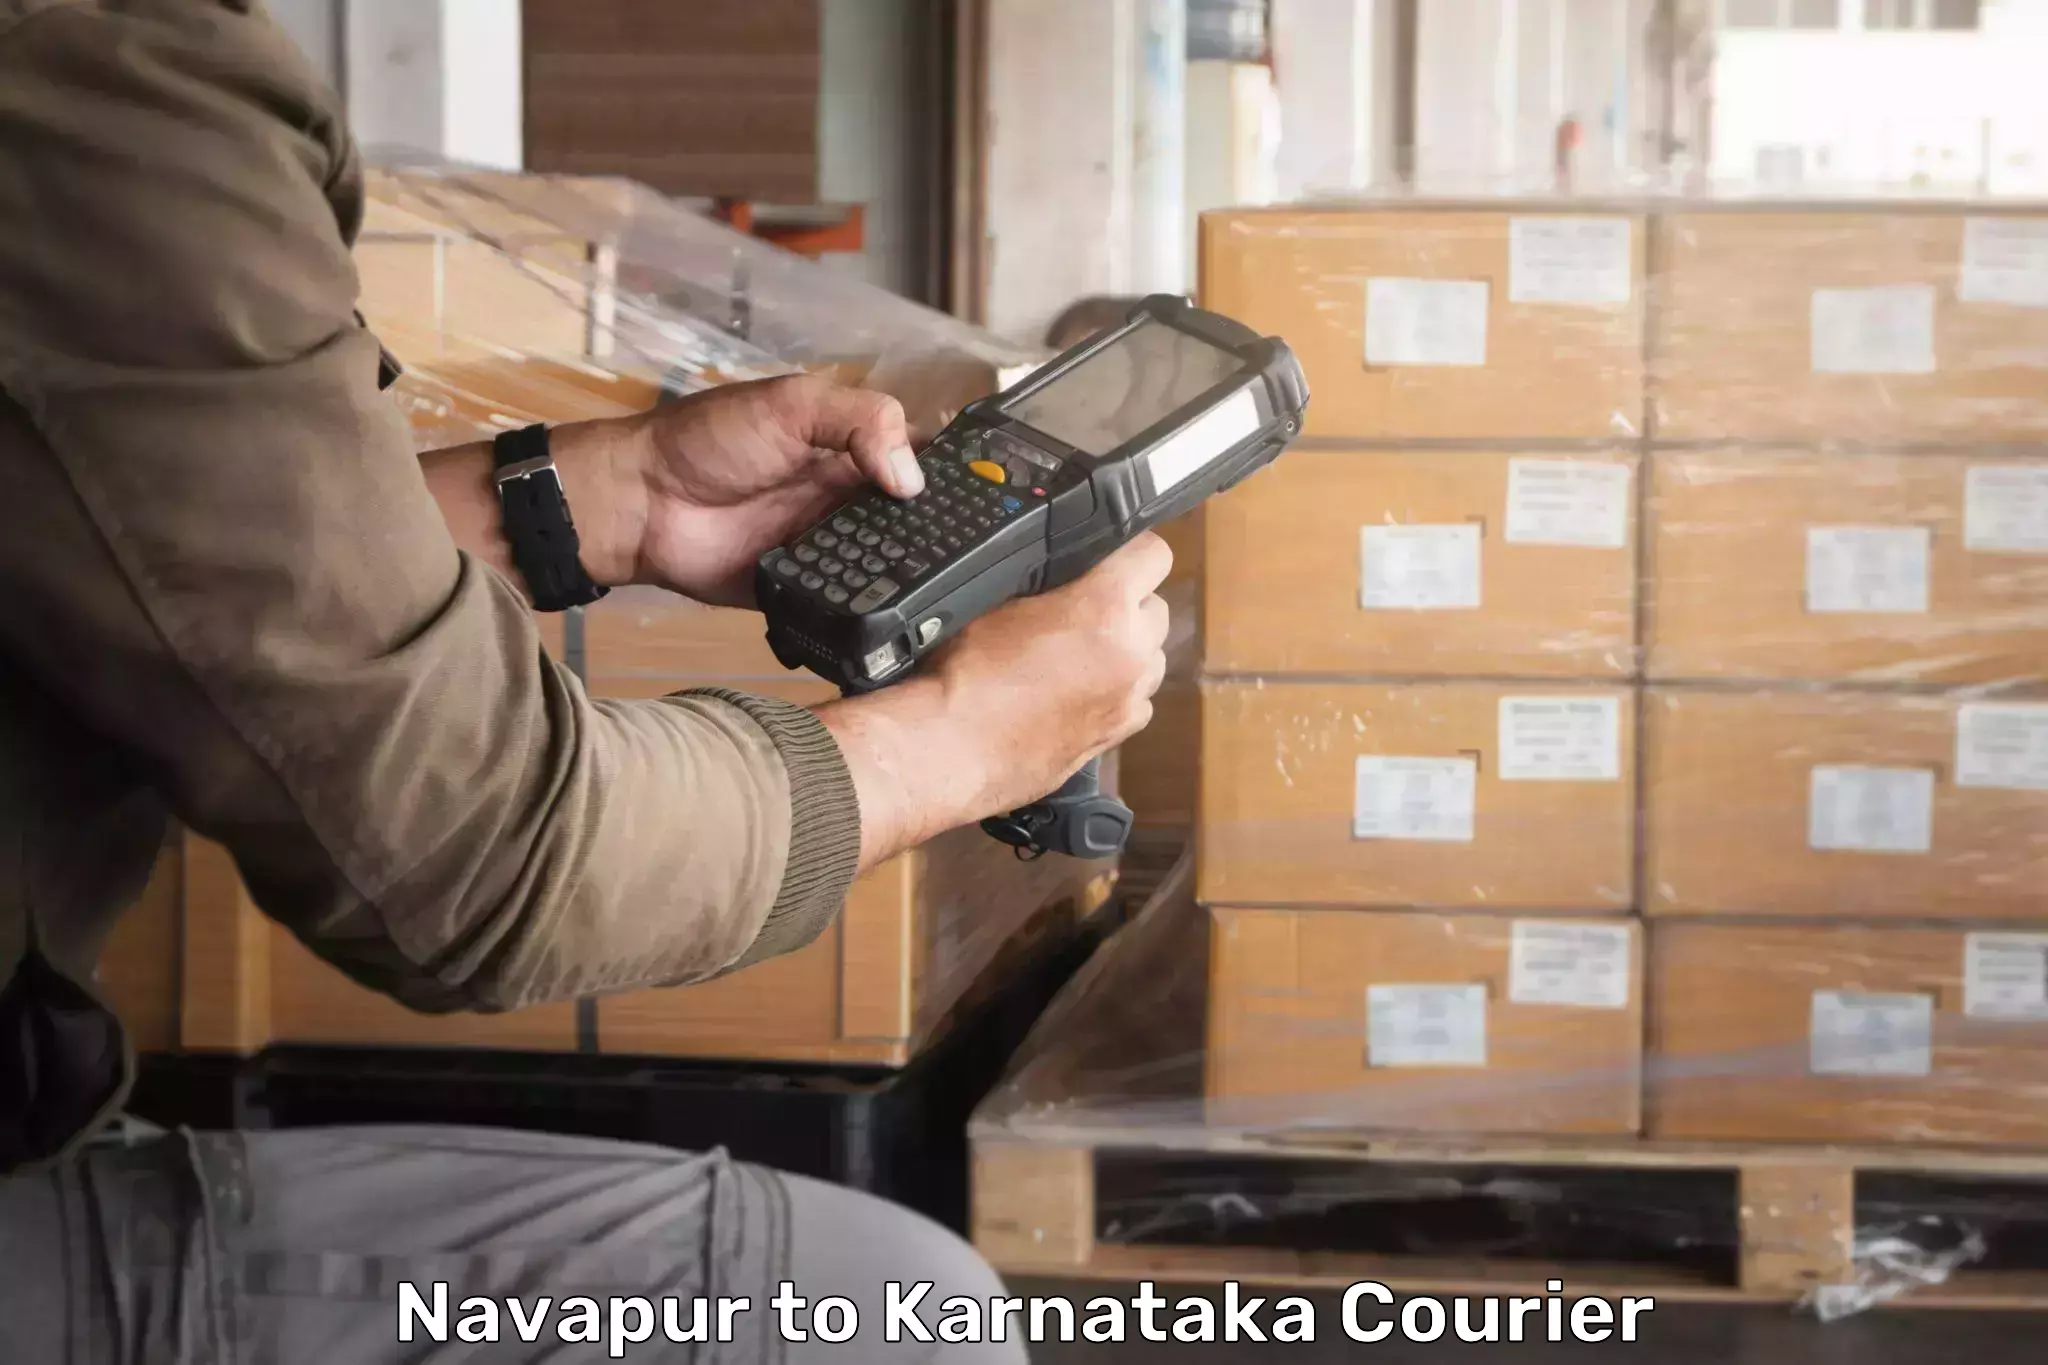 Express delivery capabilities Navapur to Kolar